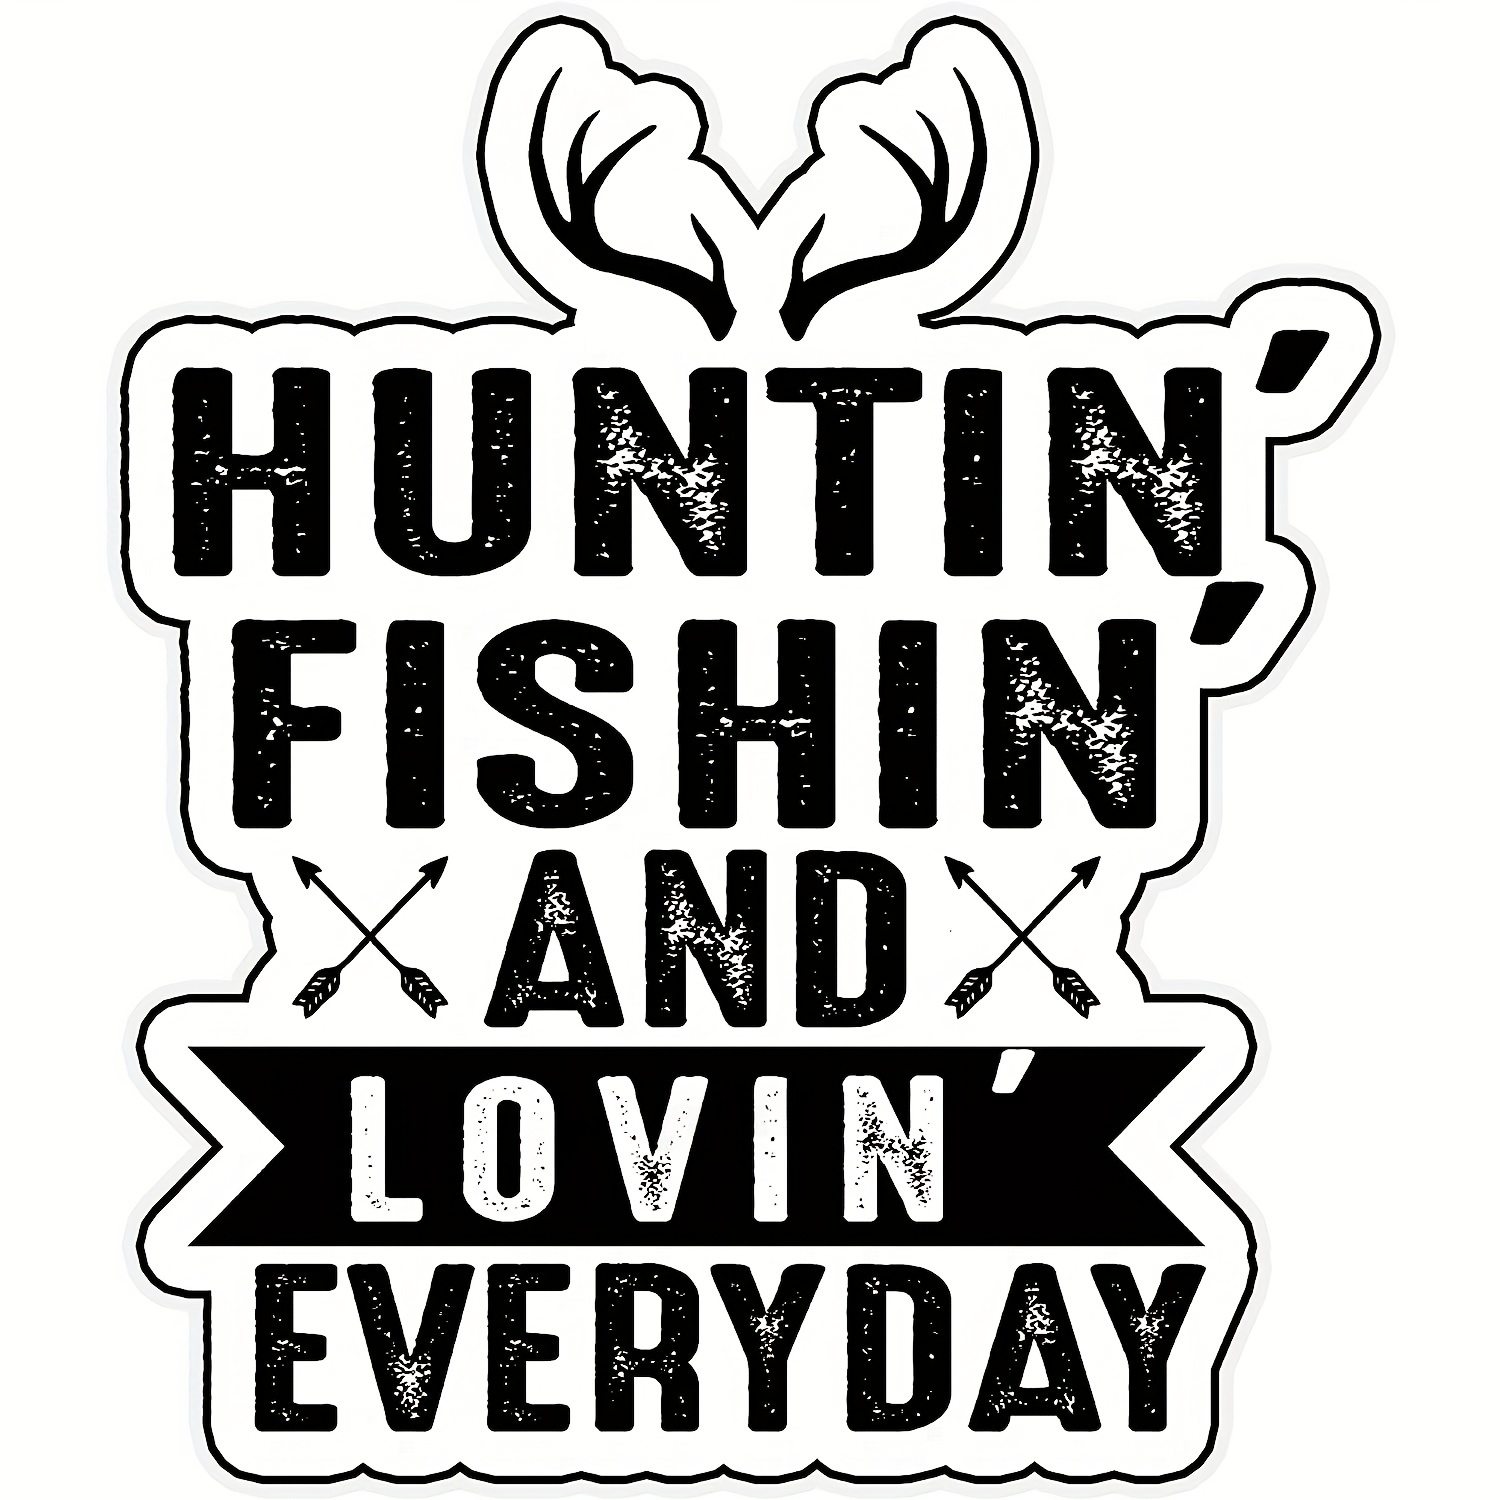 Fish Hunter Fishing Funny Vinyl Die Cut Bumper Car Stickers - Temu